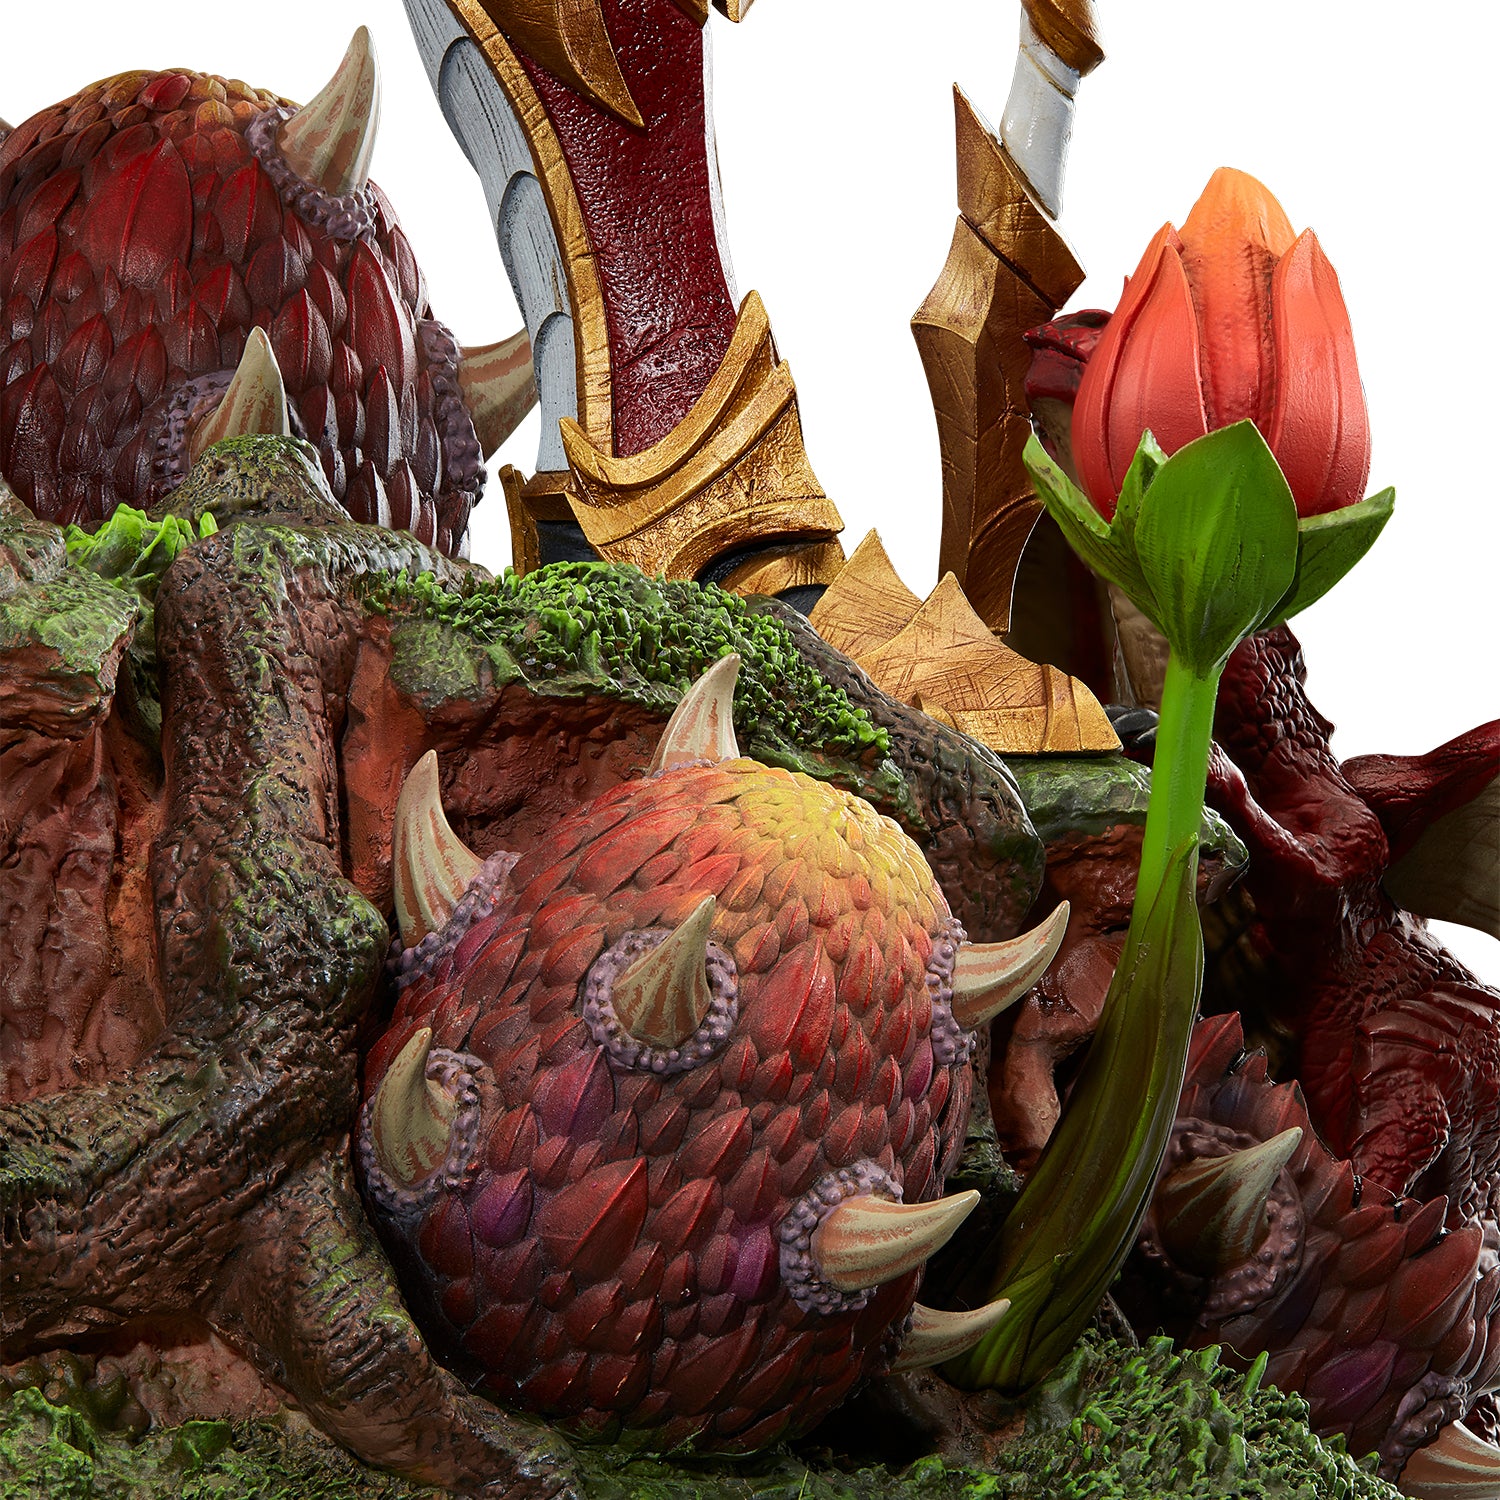 World of Warcraft Alexstrasza 52cm Statue - Close Up View